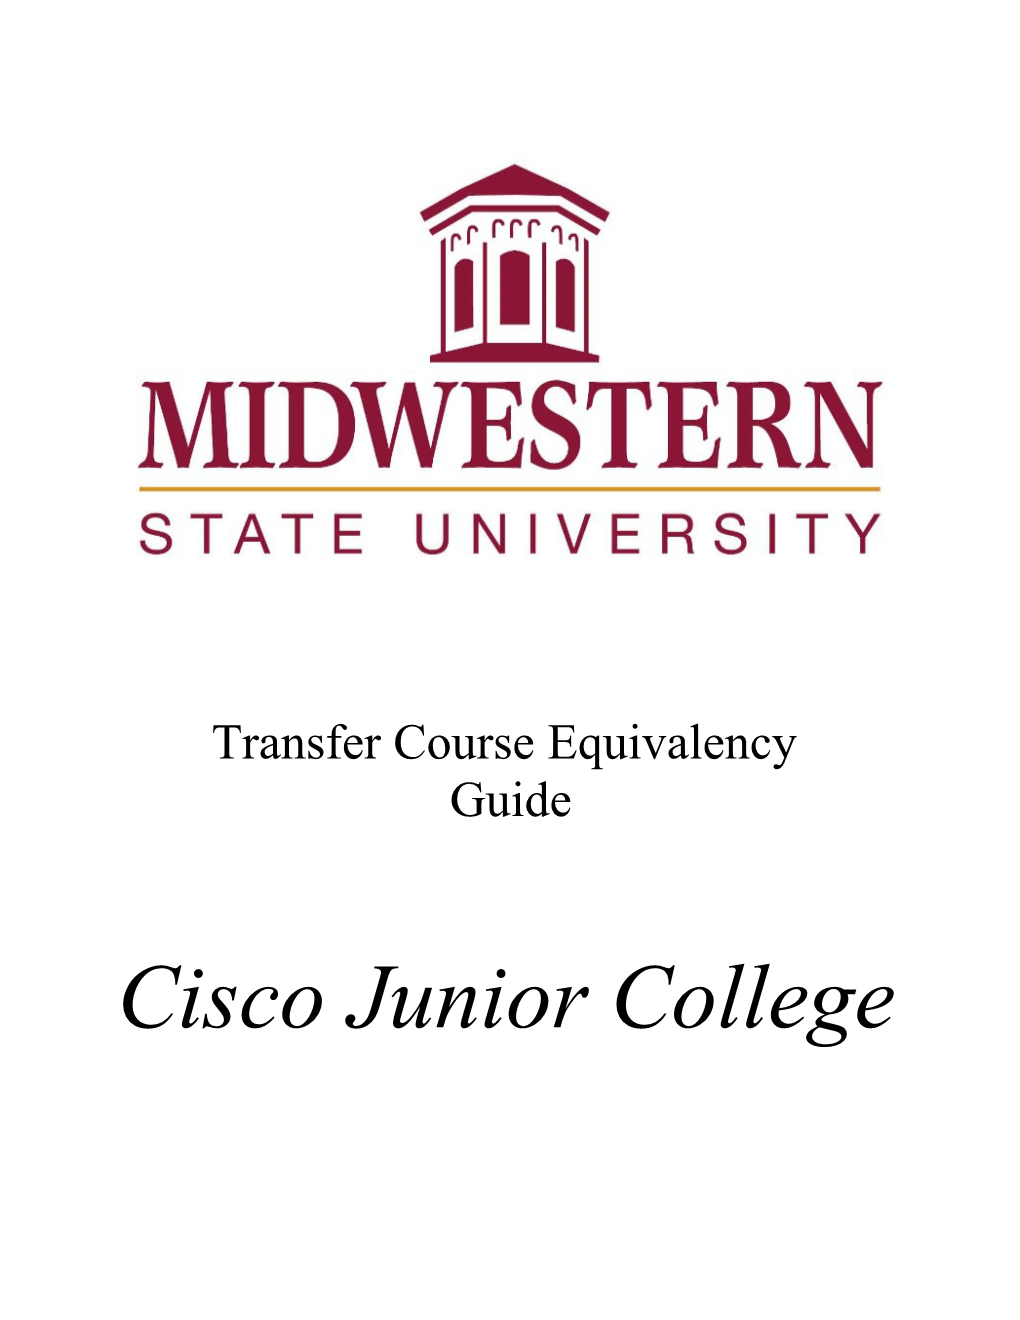 CJC (Coding at Cisco Junior College)MSU